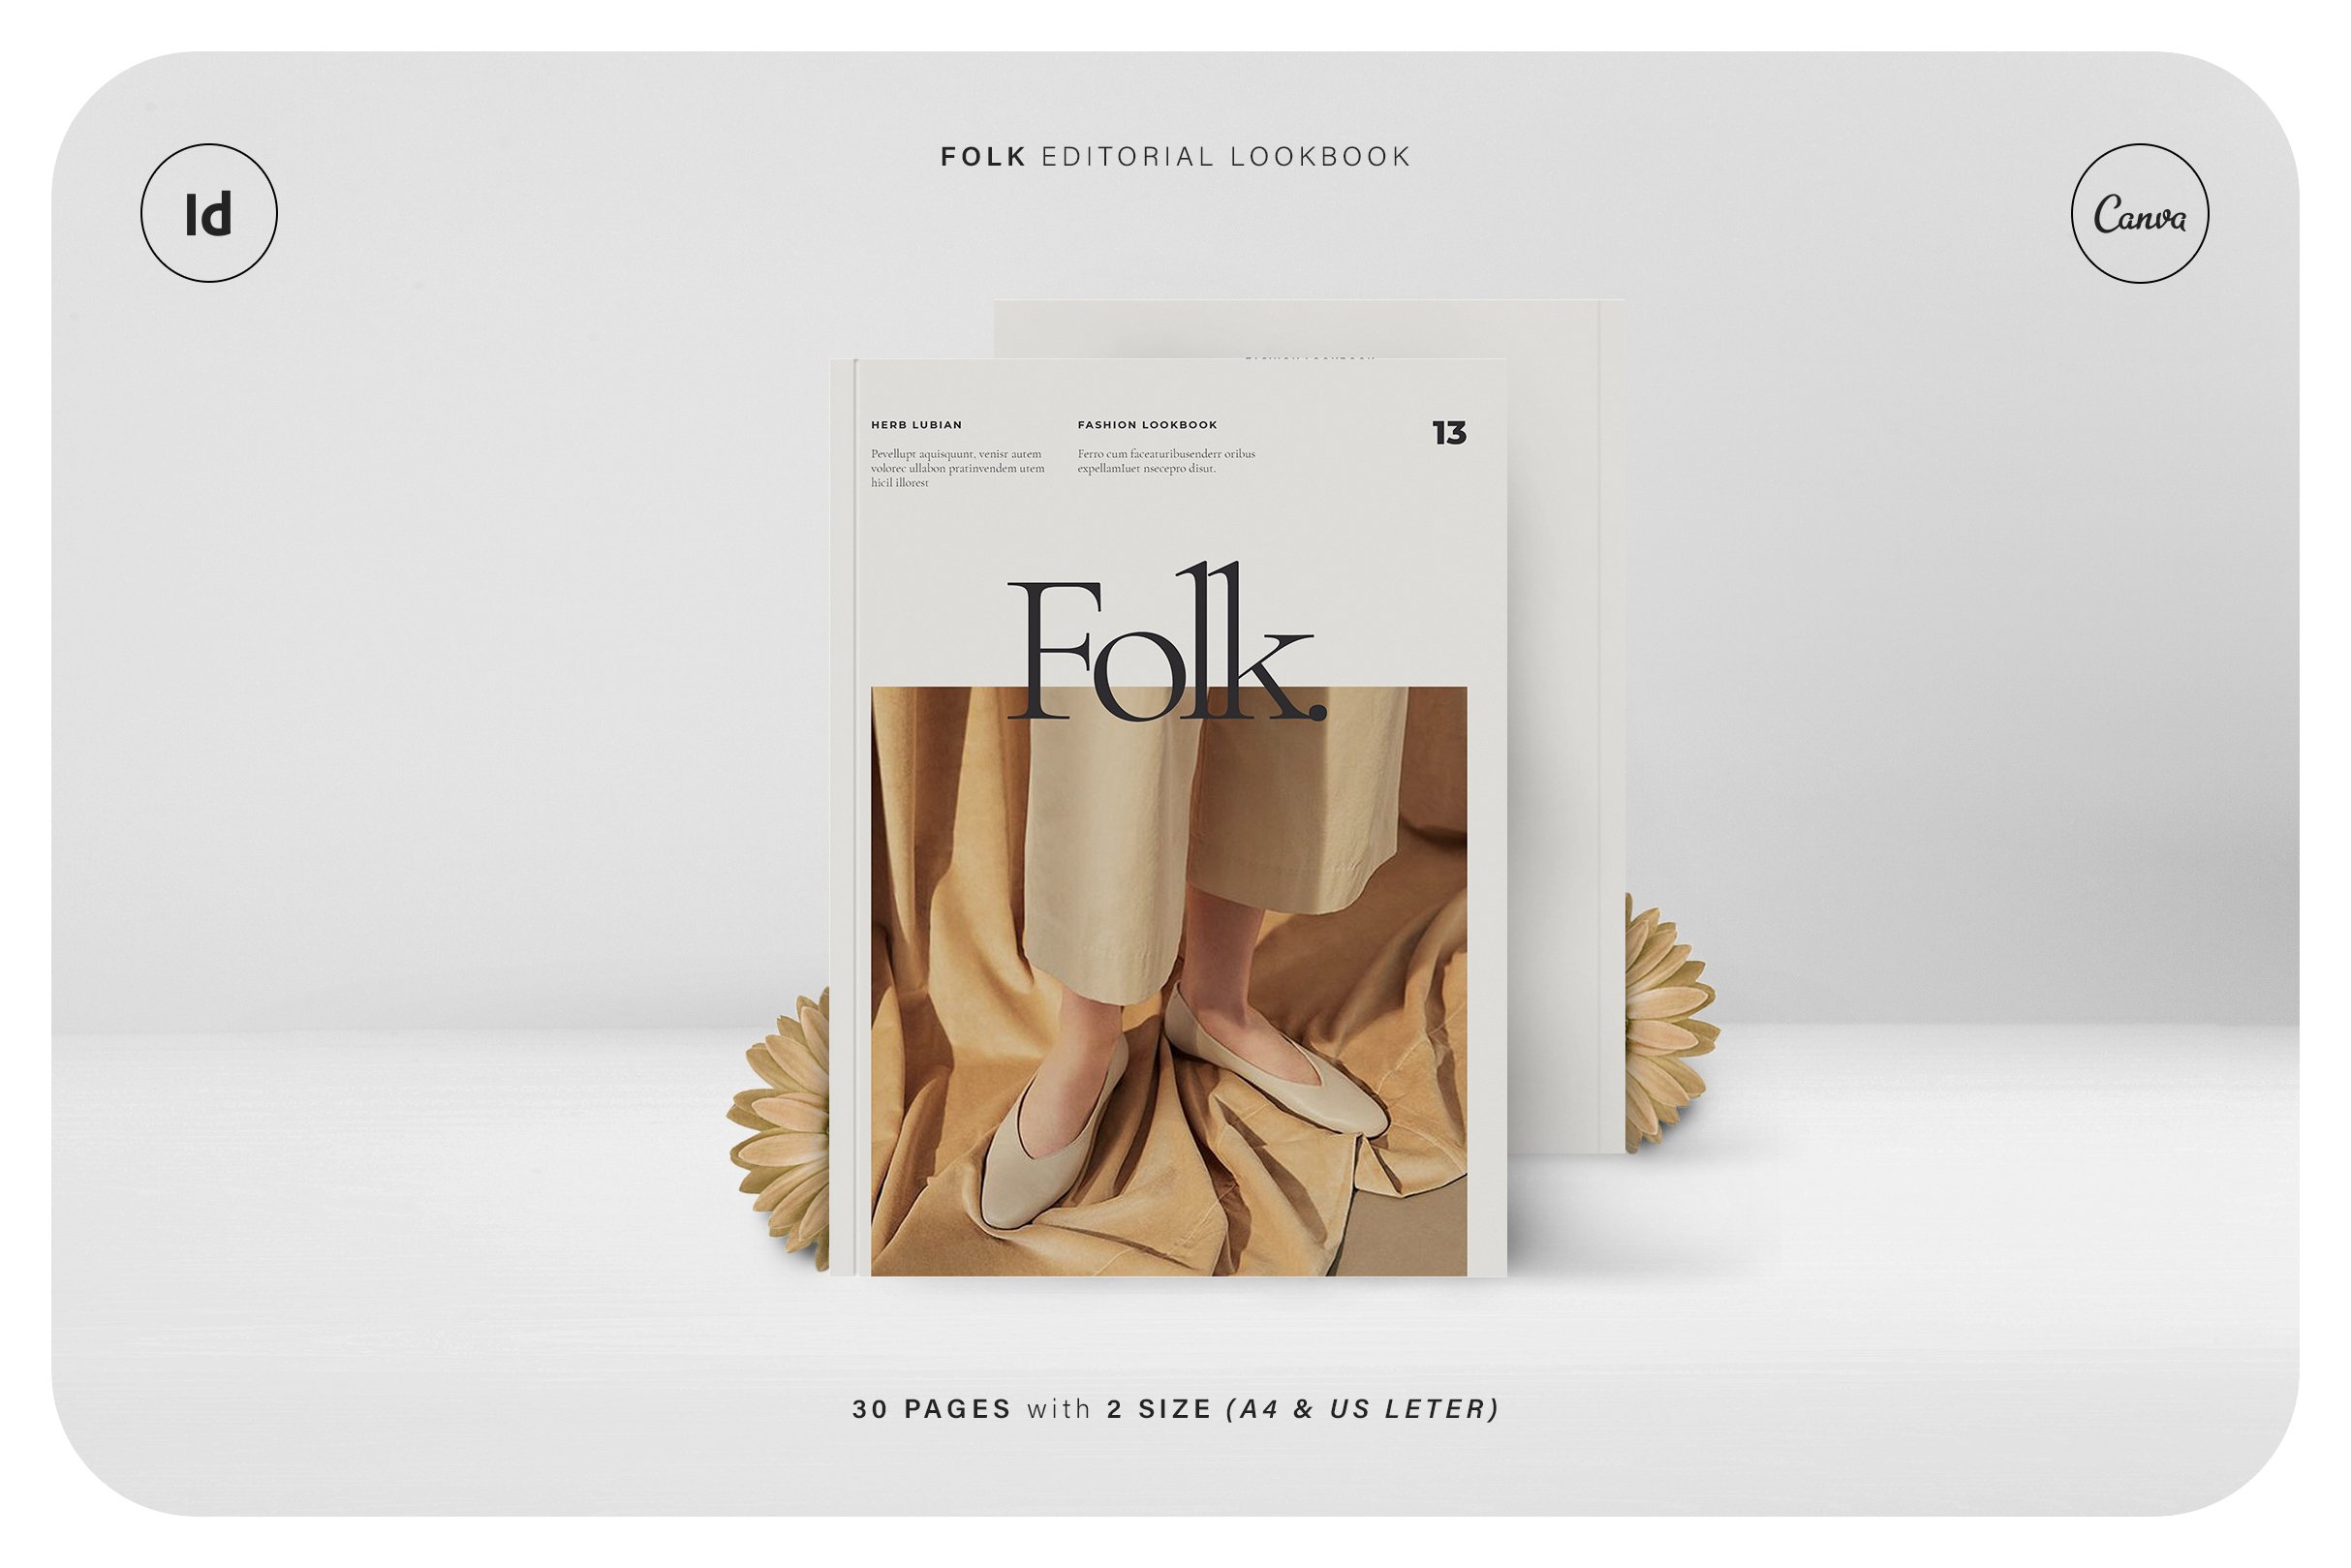 FOLK Editorial Lookbook cover image.